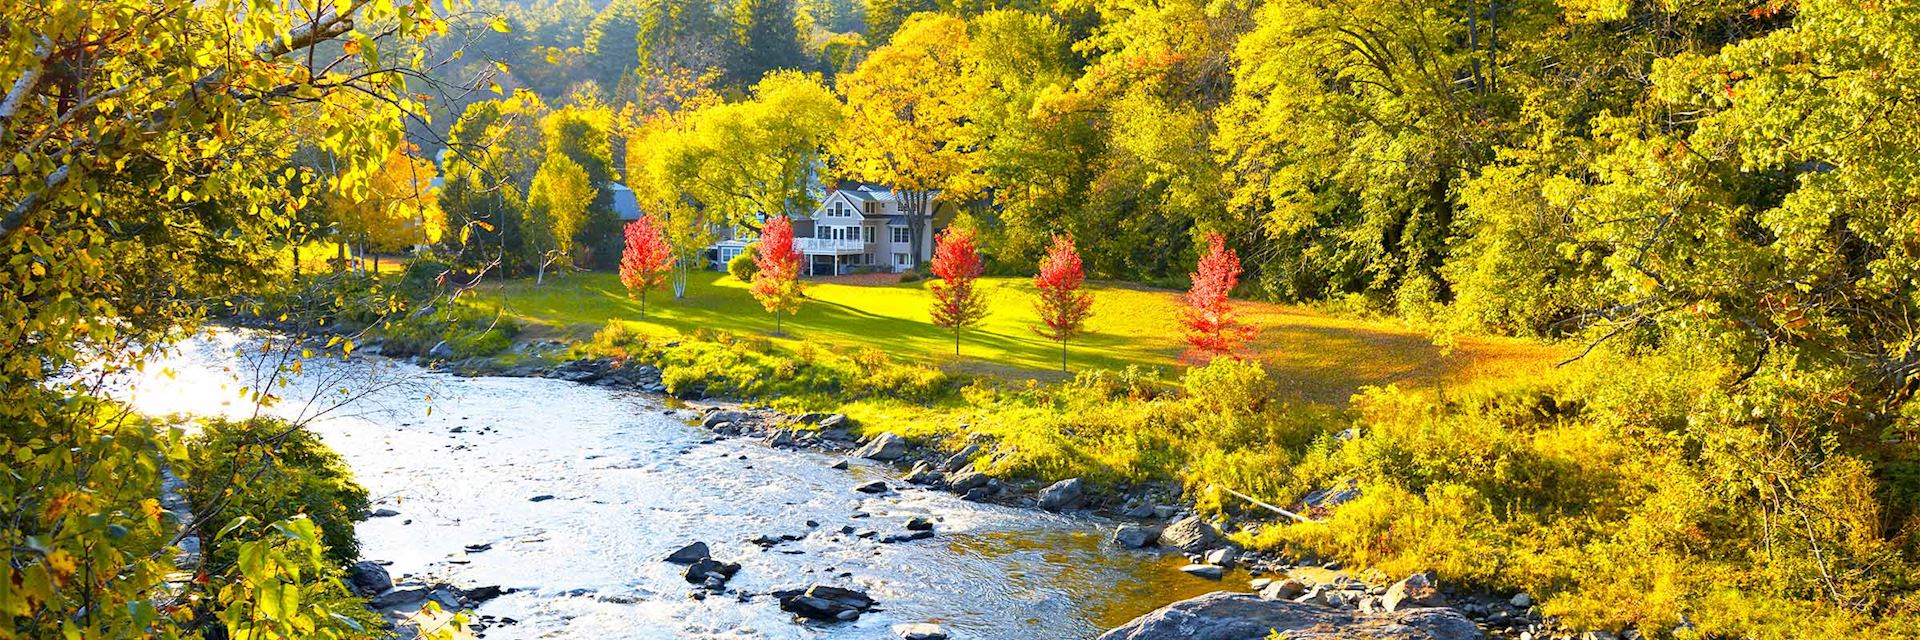 Ottauquechee River in Woodstock, Vermont